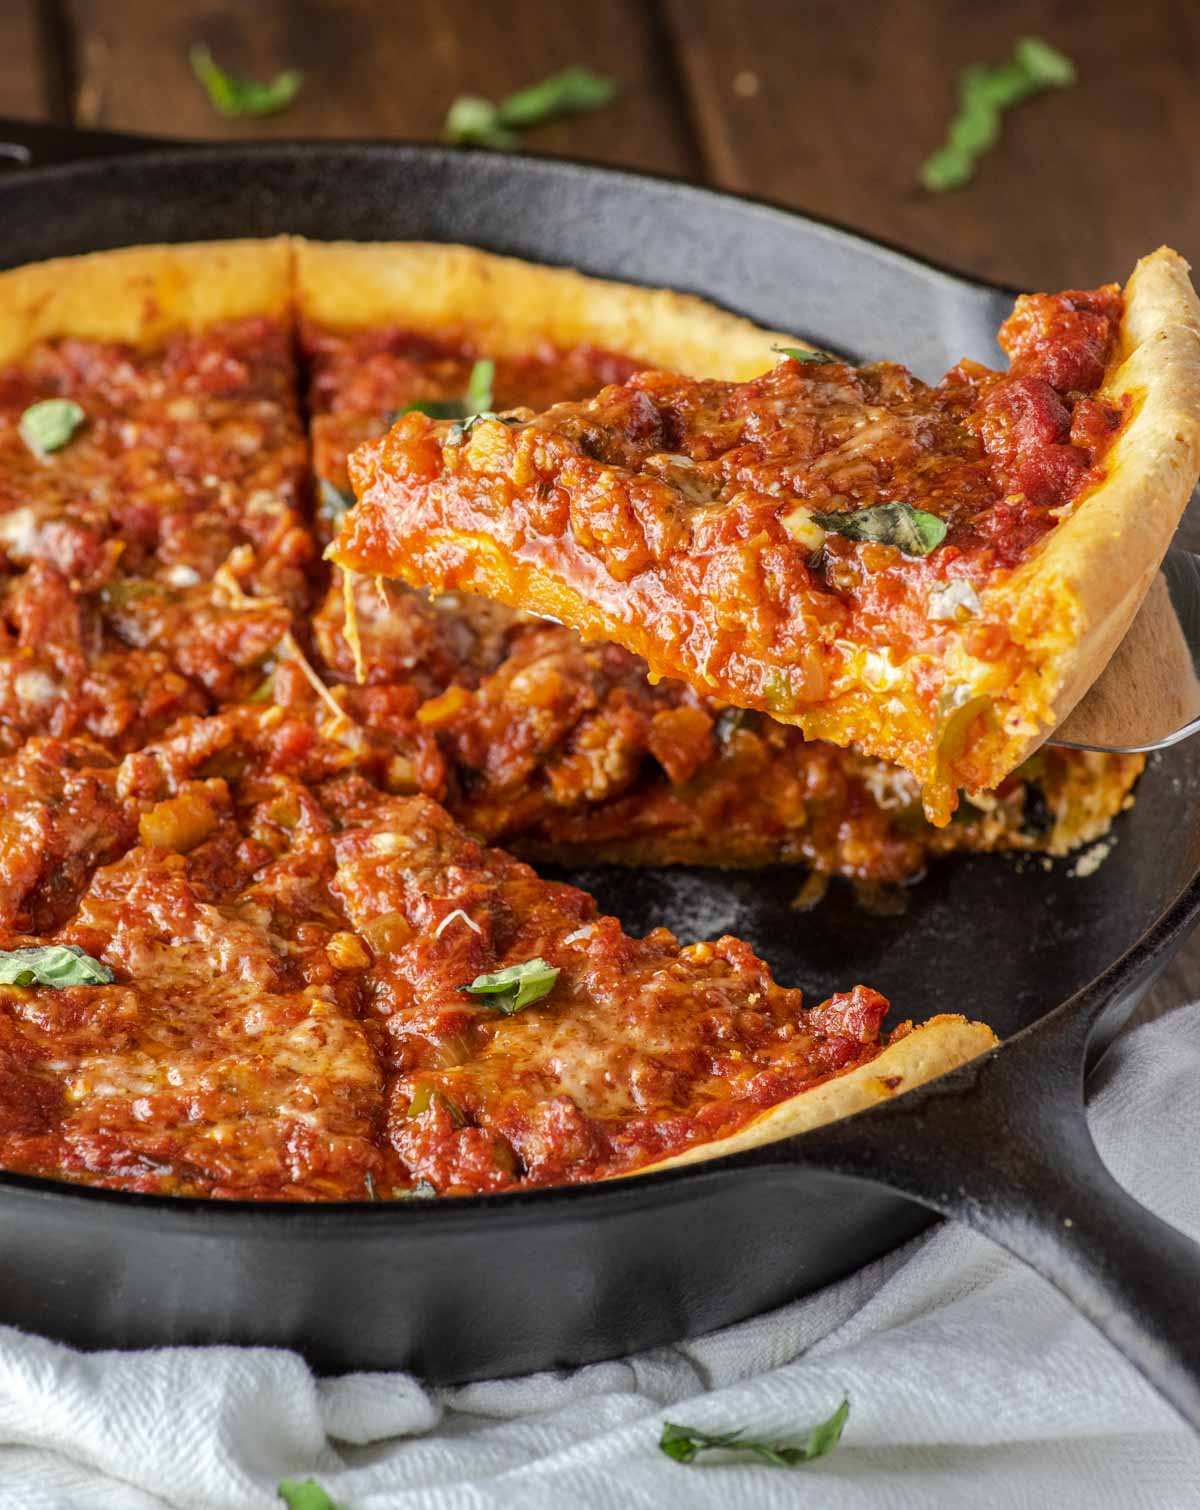 https://www.chiselandfork.com/wp-content/uploads/2019/02/chicago-style-deep-dish-pizza-4.jpg